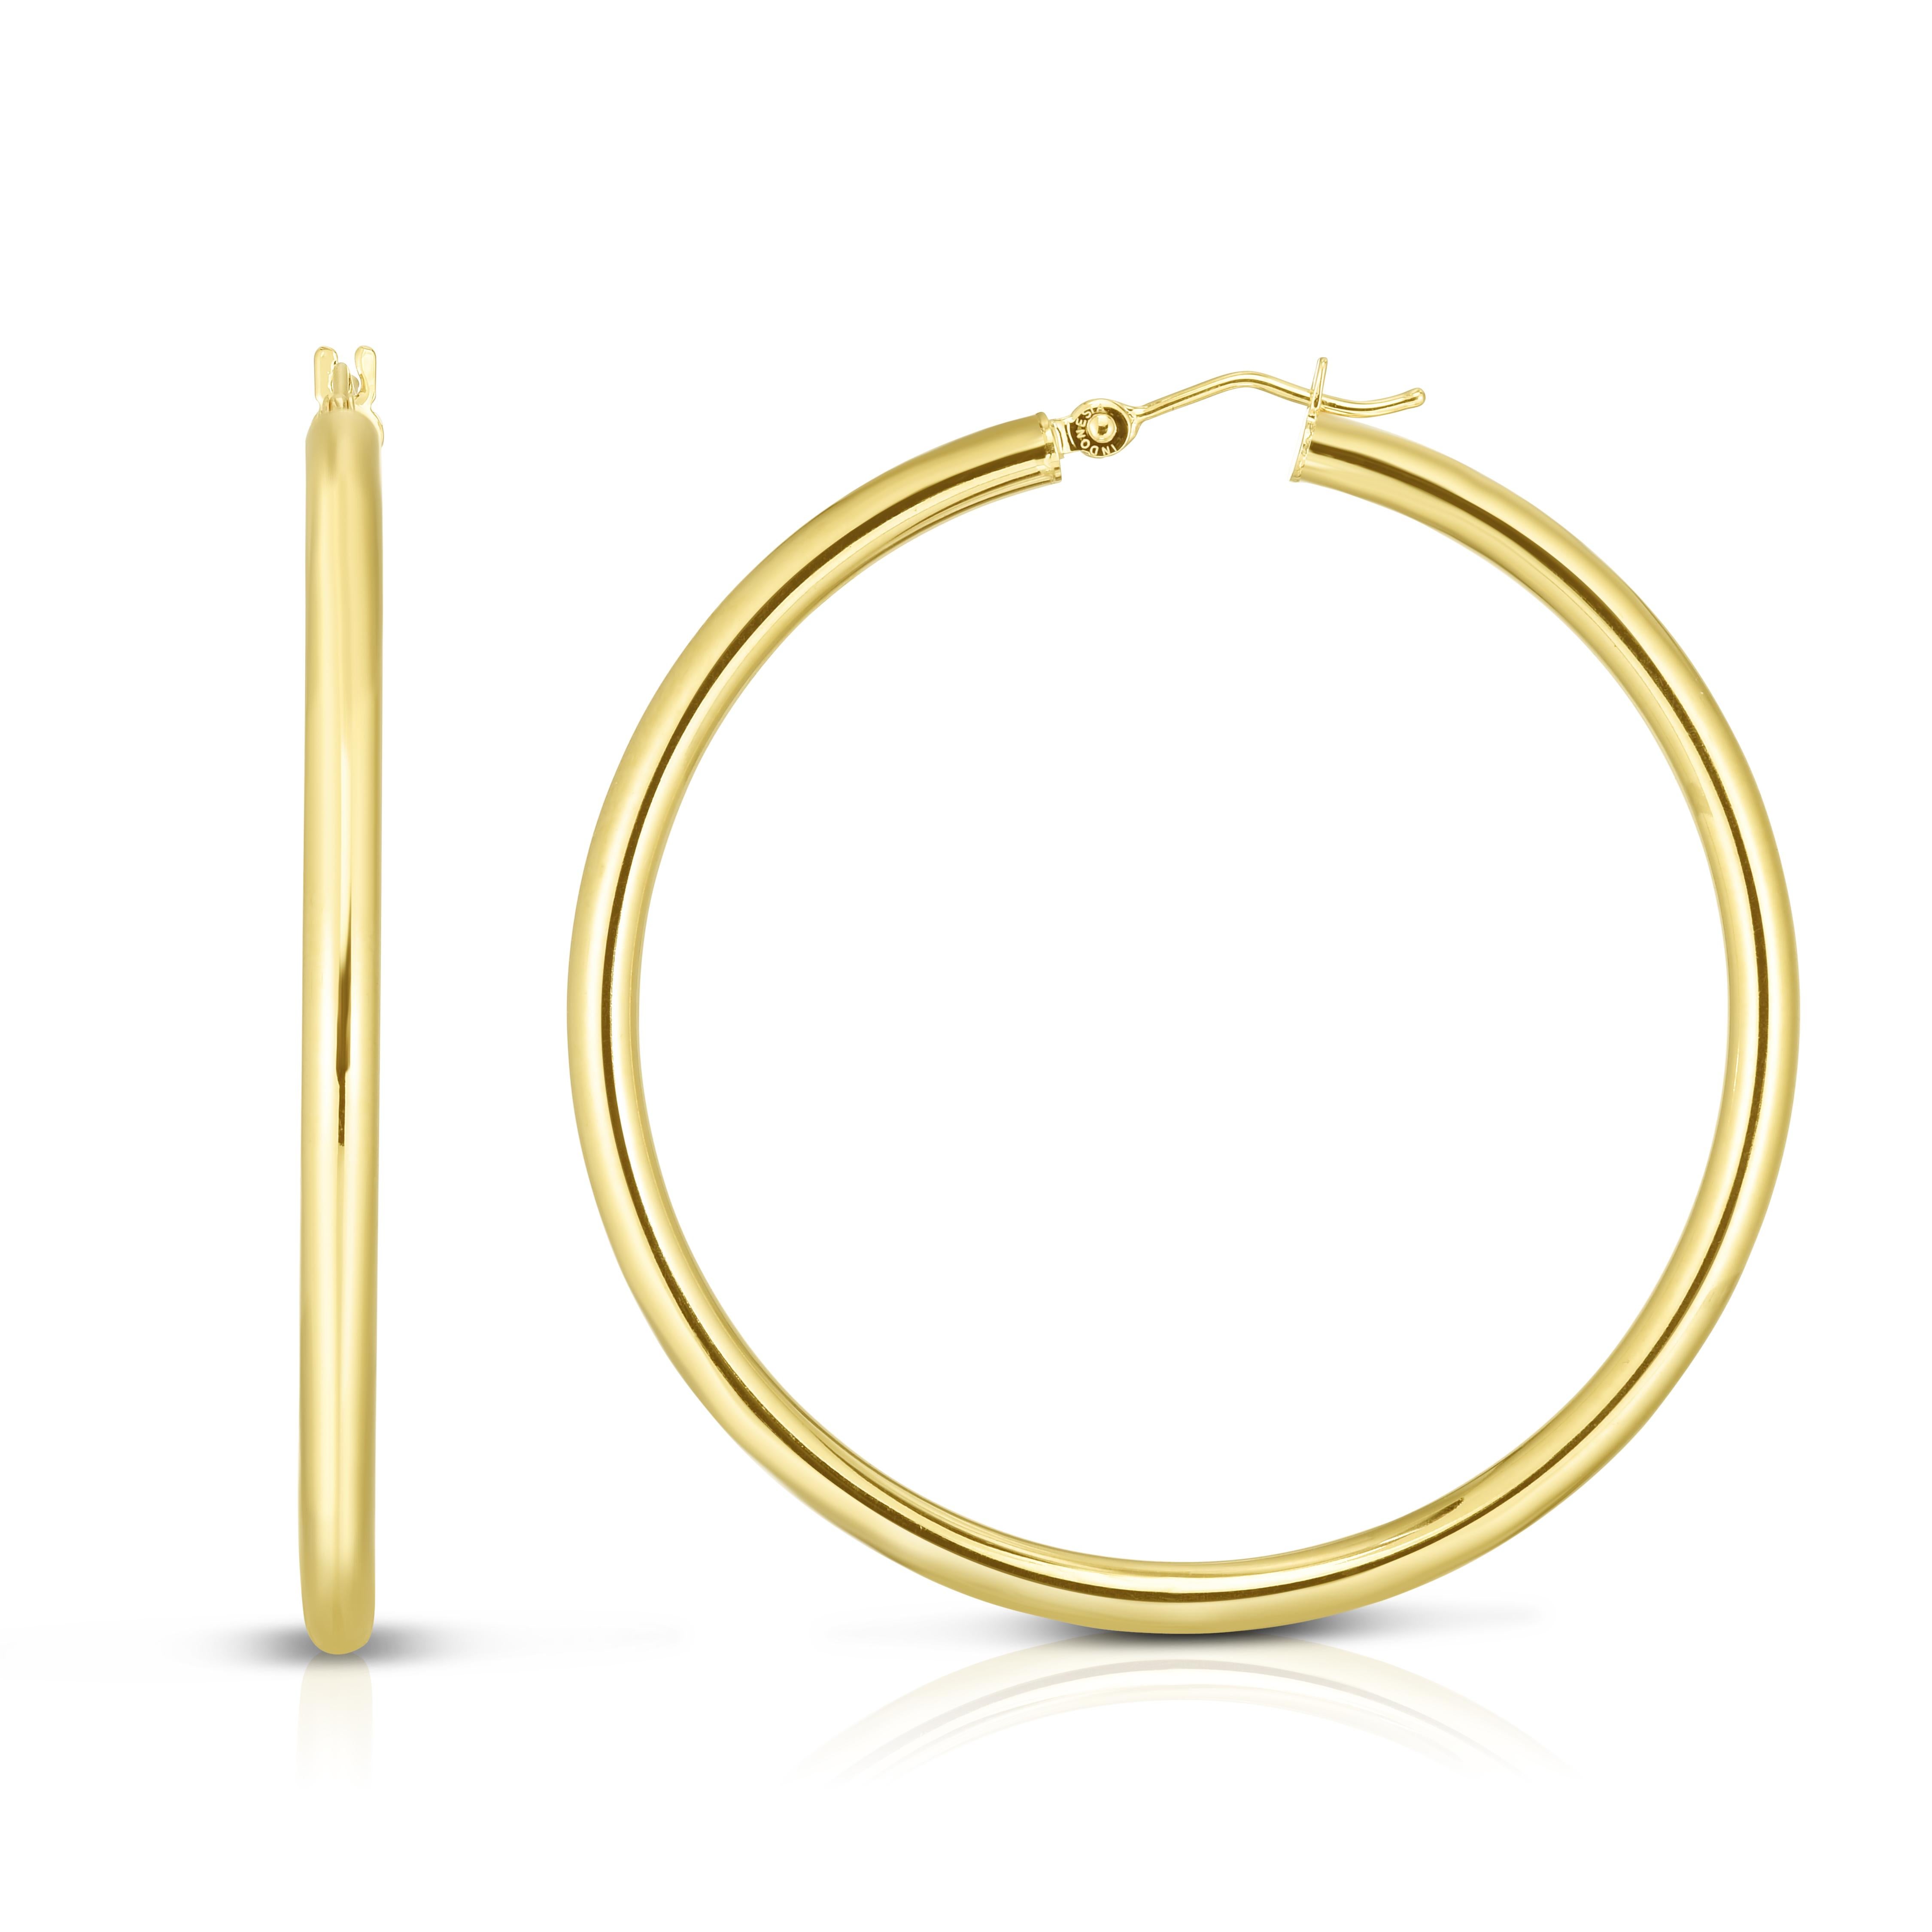 Round Cut Large Yellow Gold Hoop Earrings 2.25 Inch Diameter 